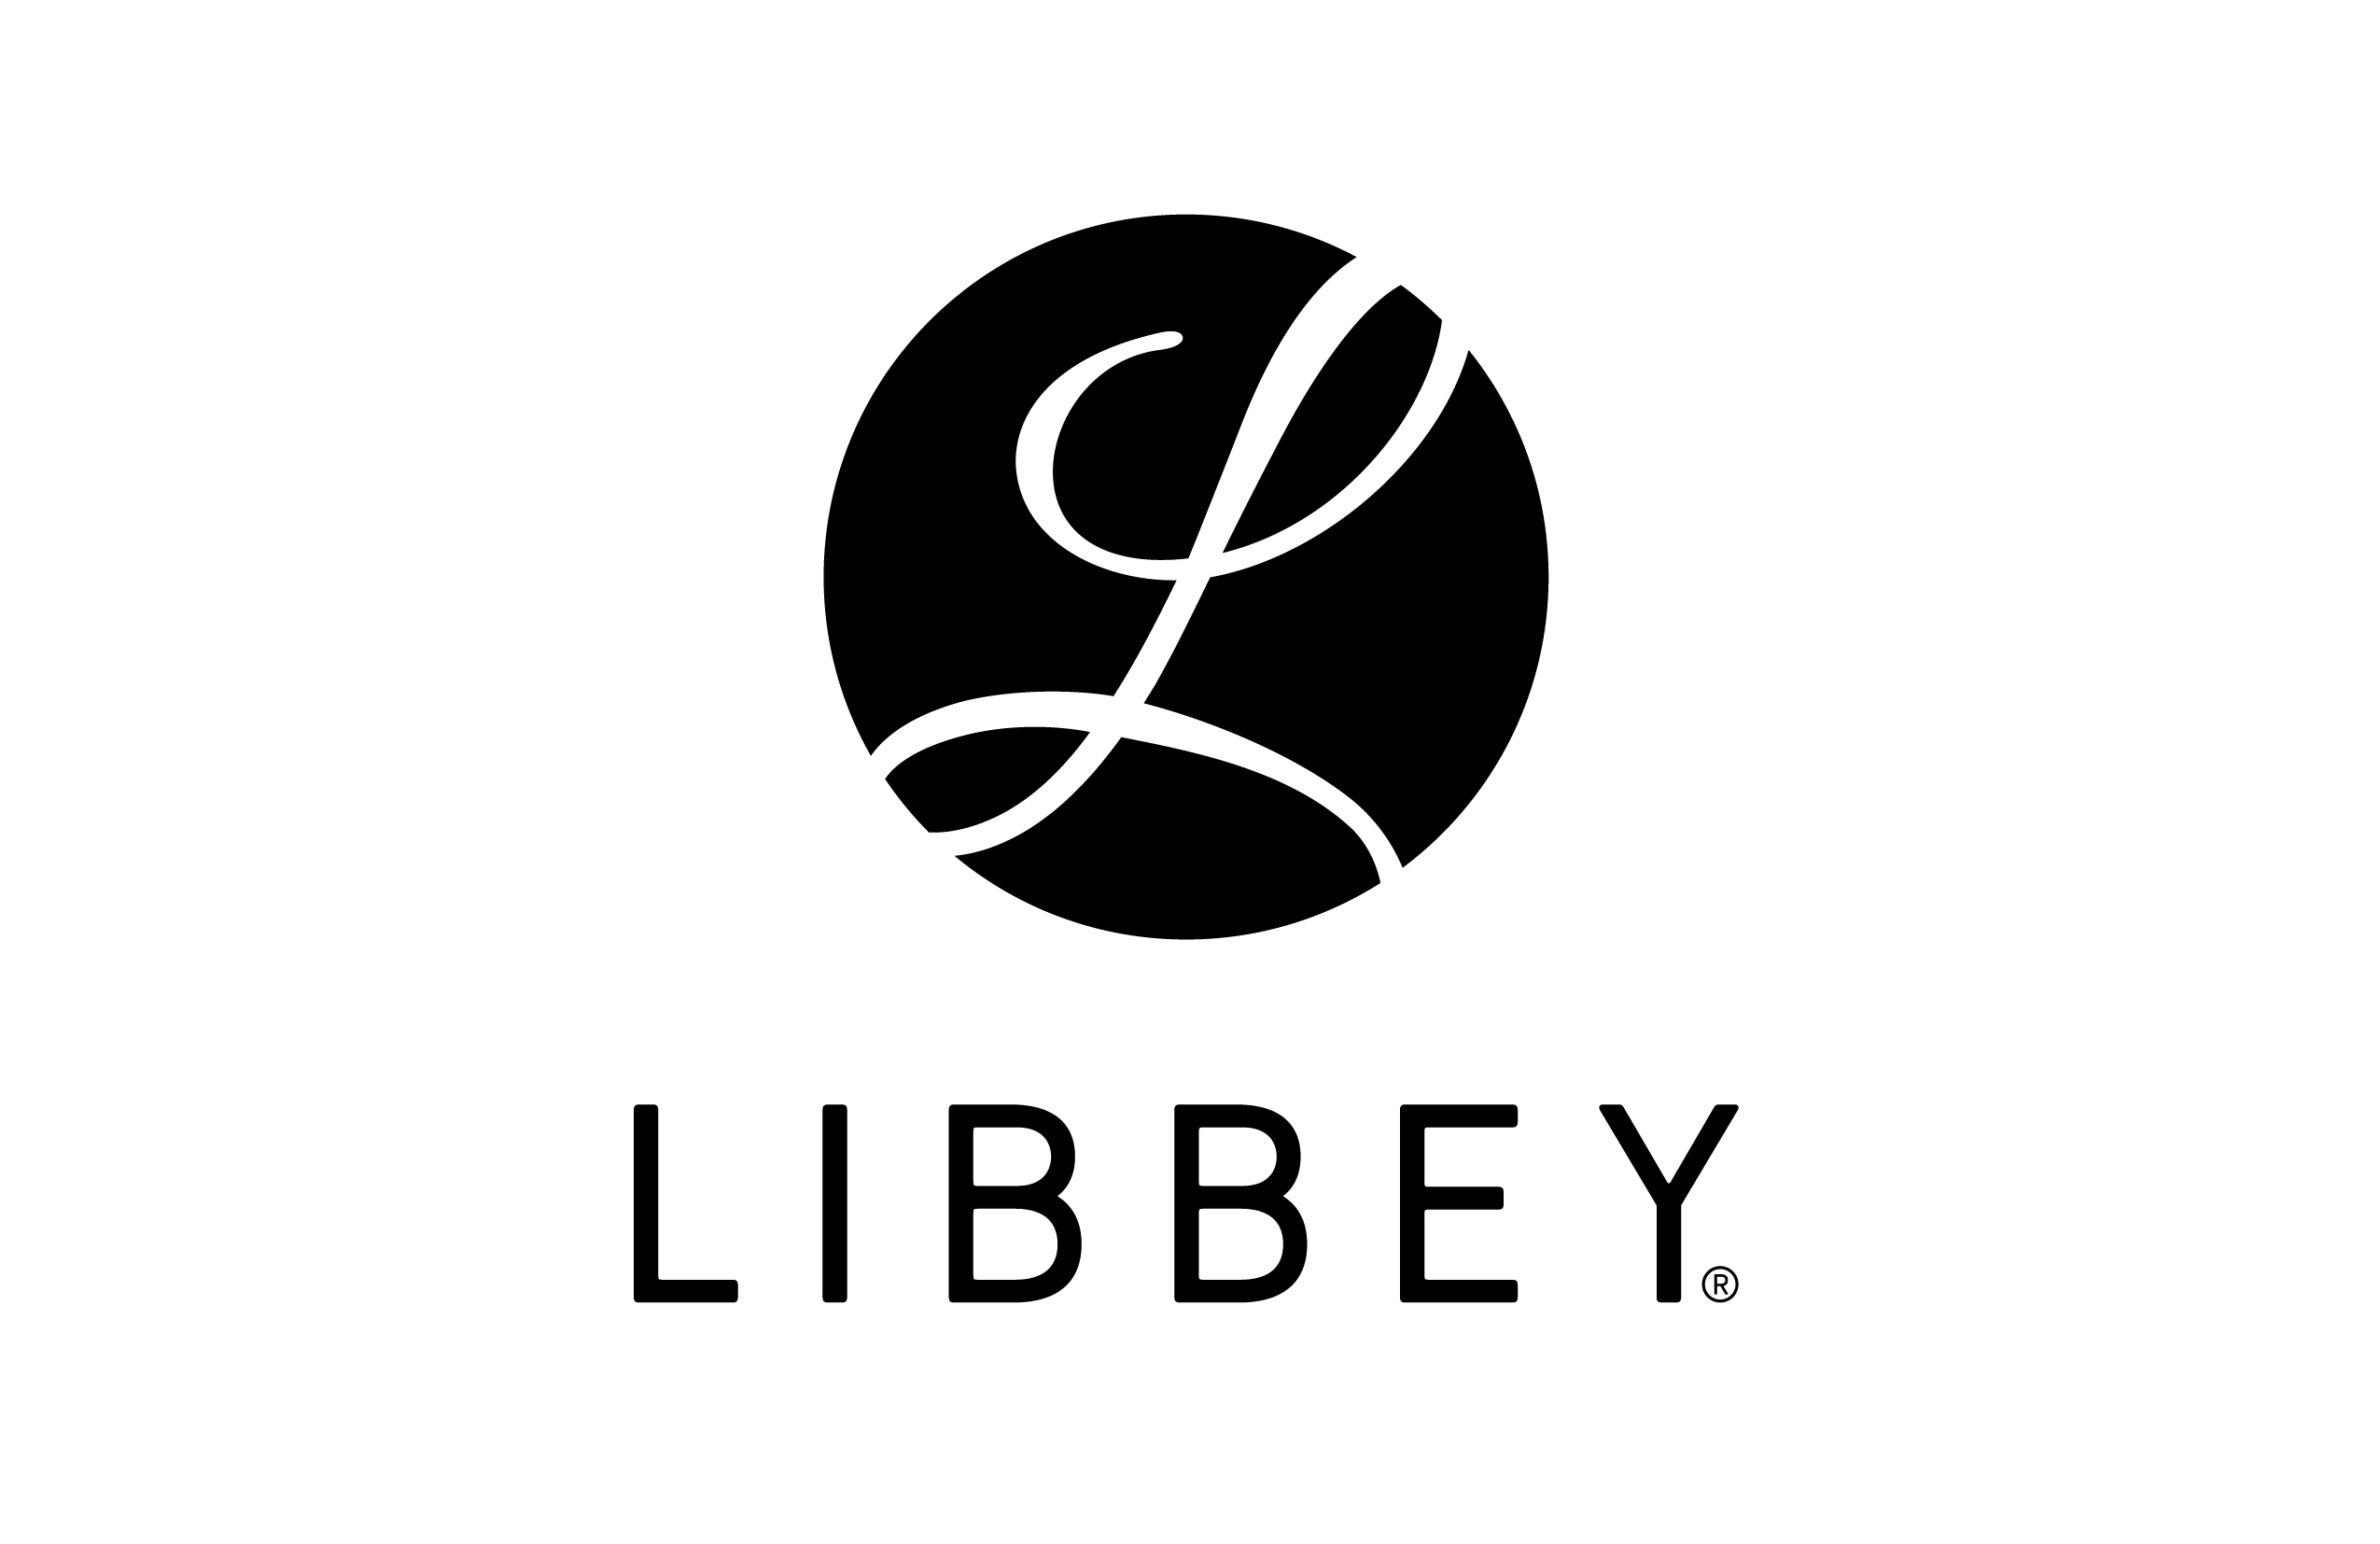 Libbey Helps Operators Establish Local Craft Beer Expertise Through Proper Glassware